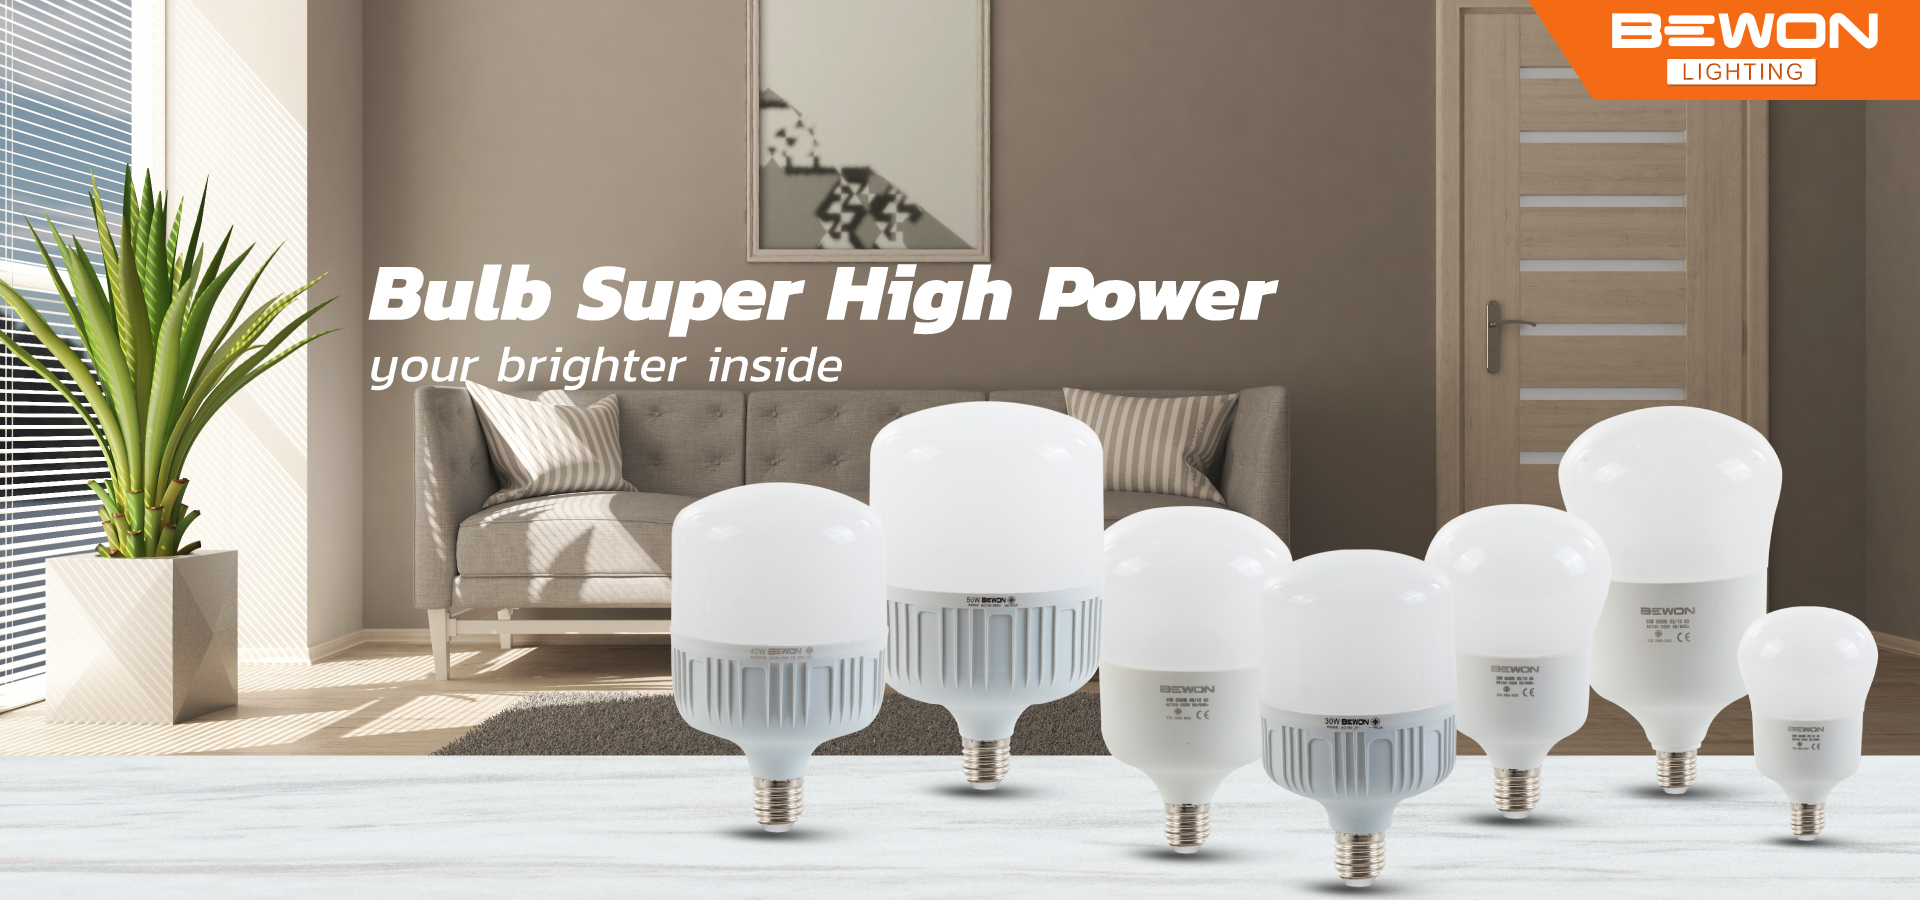 Bulb-Super-High-Power